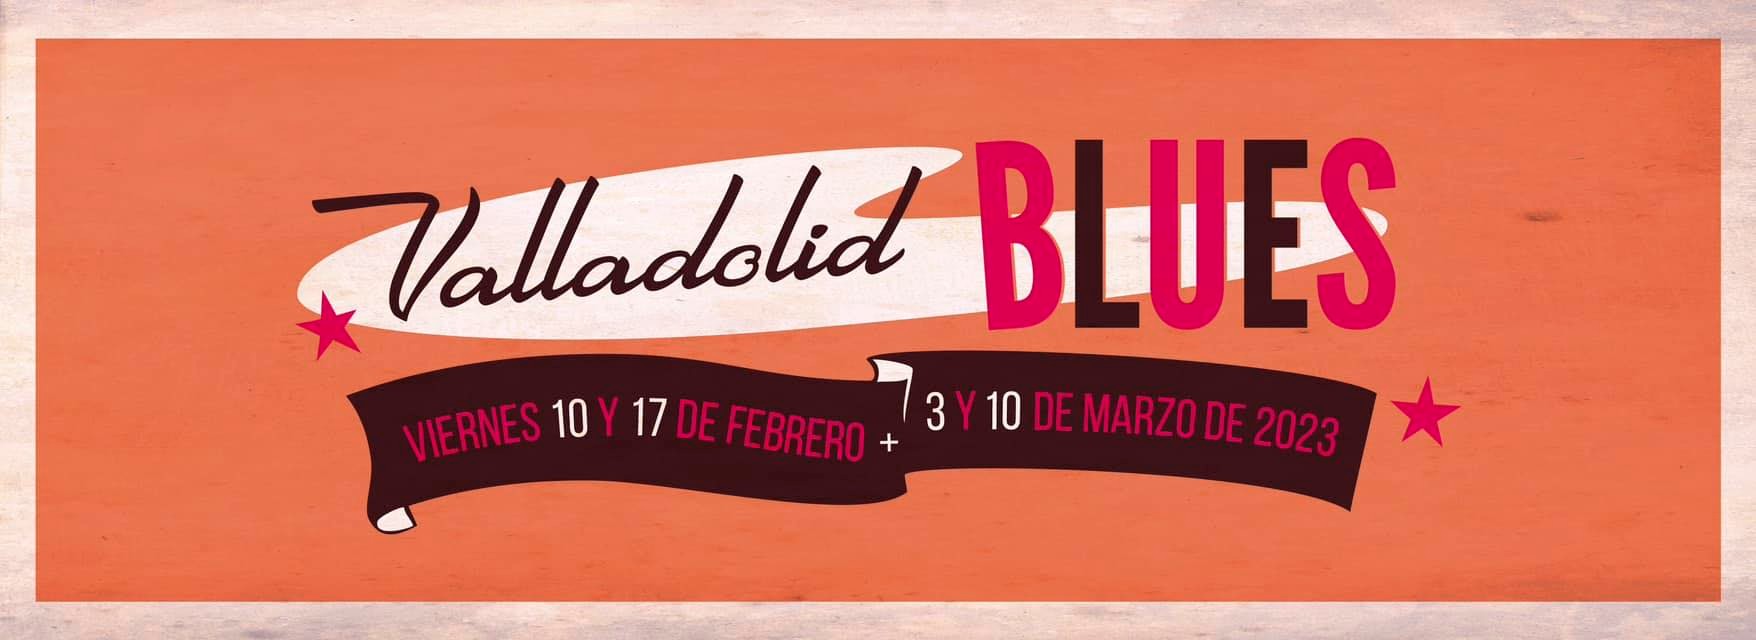 Valladolid Blues